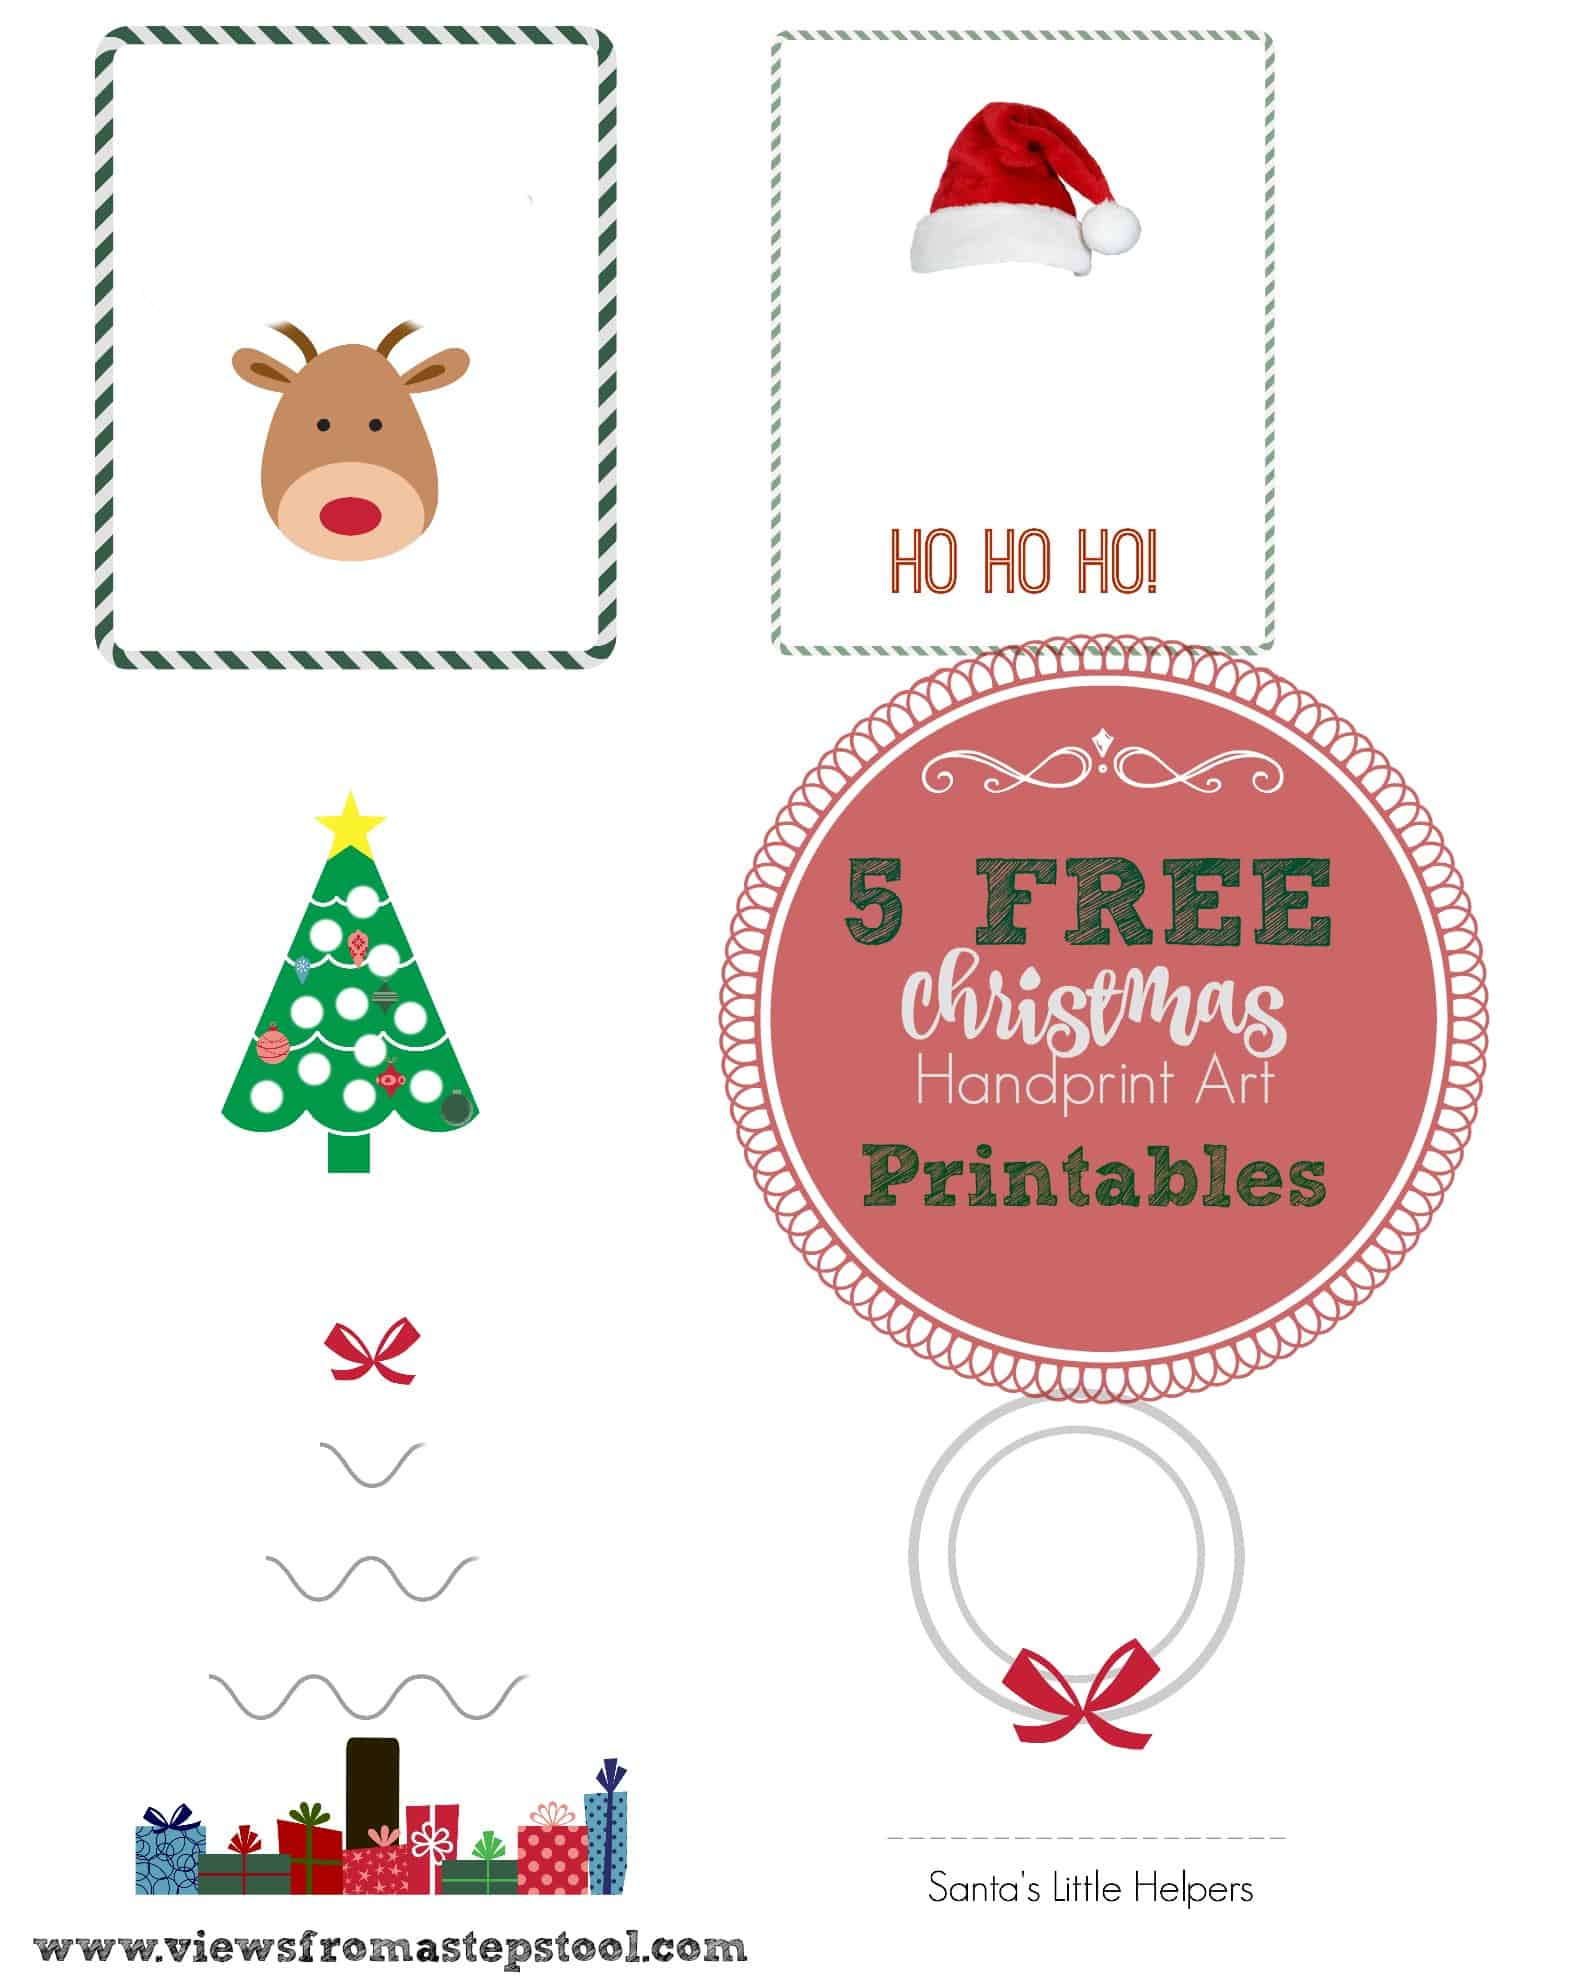 5 Christmas Handprint Art Templates for Gifting, Decor or Fun!